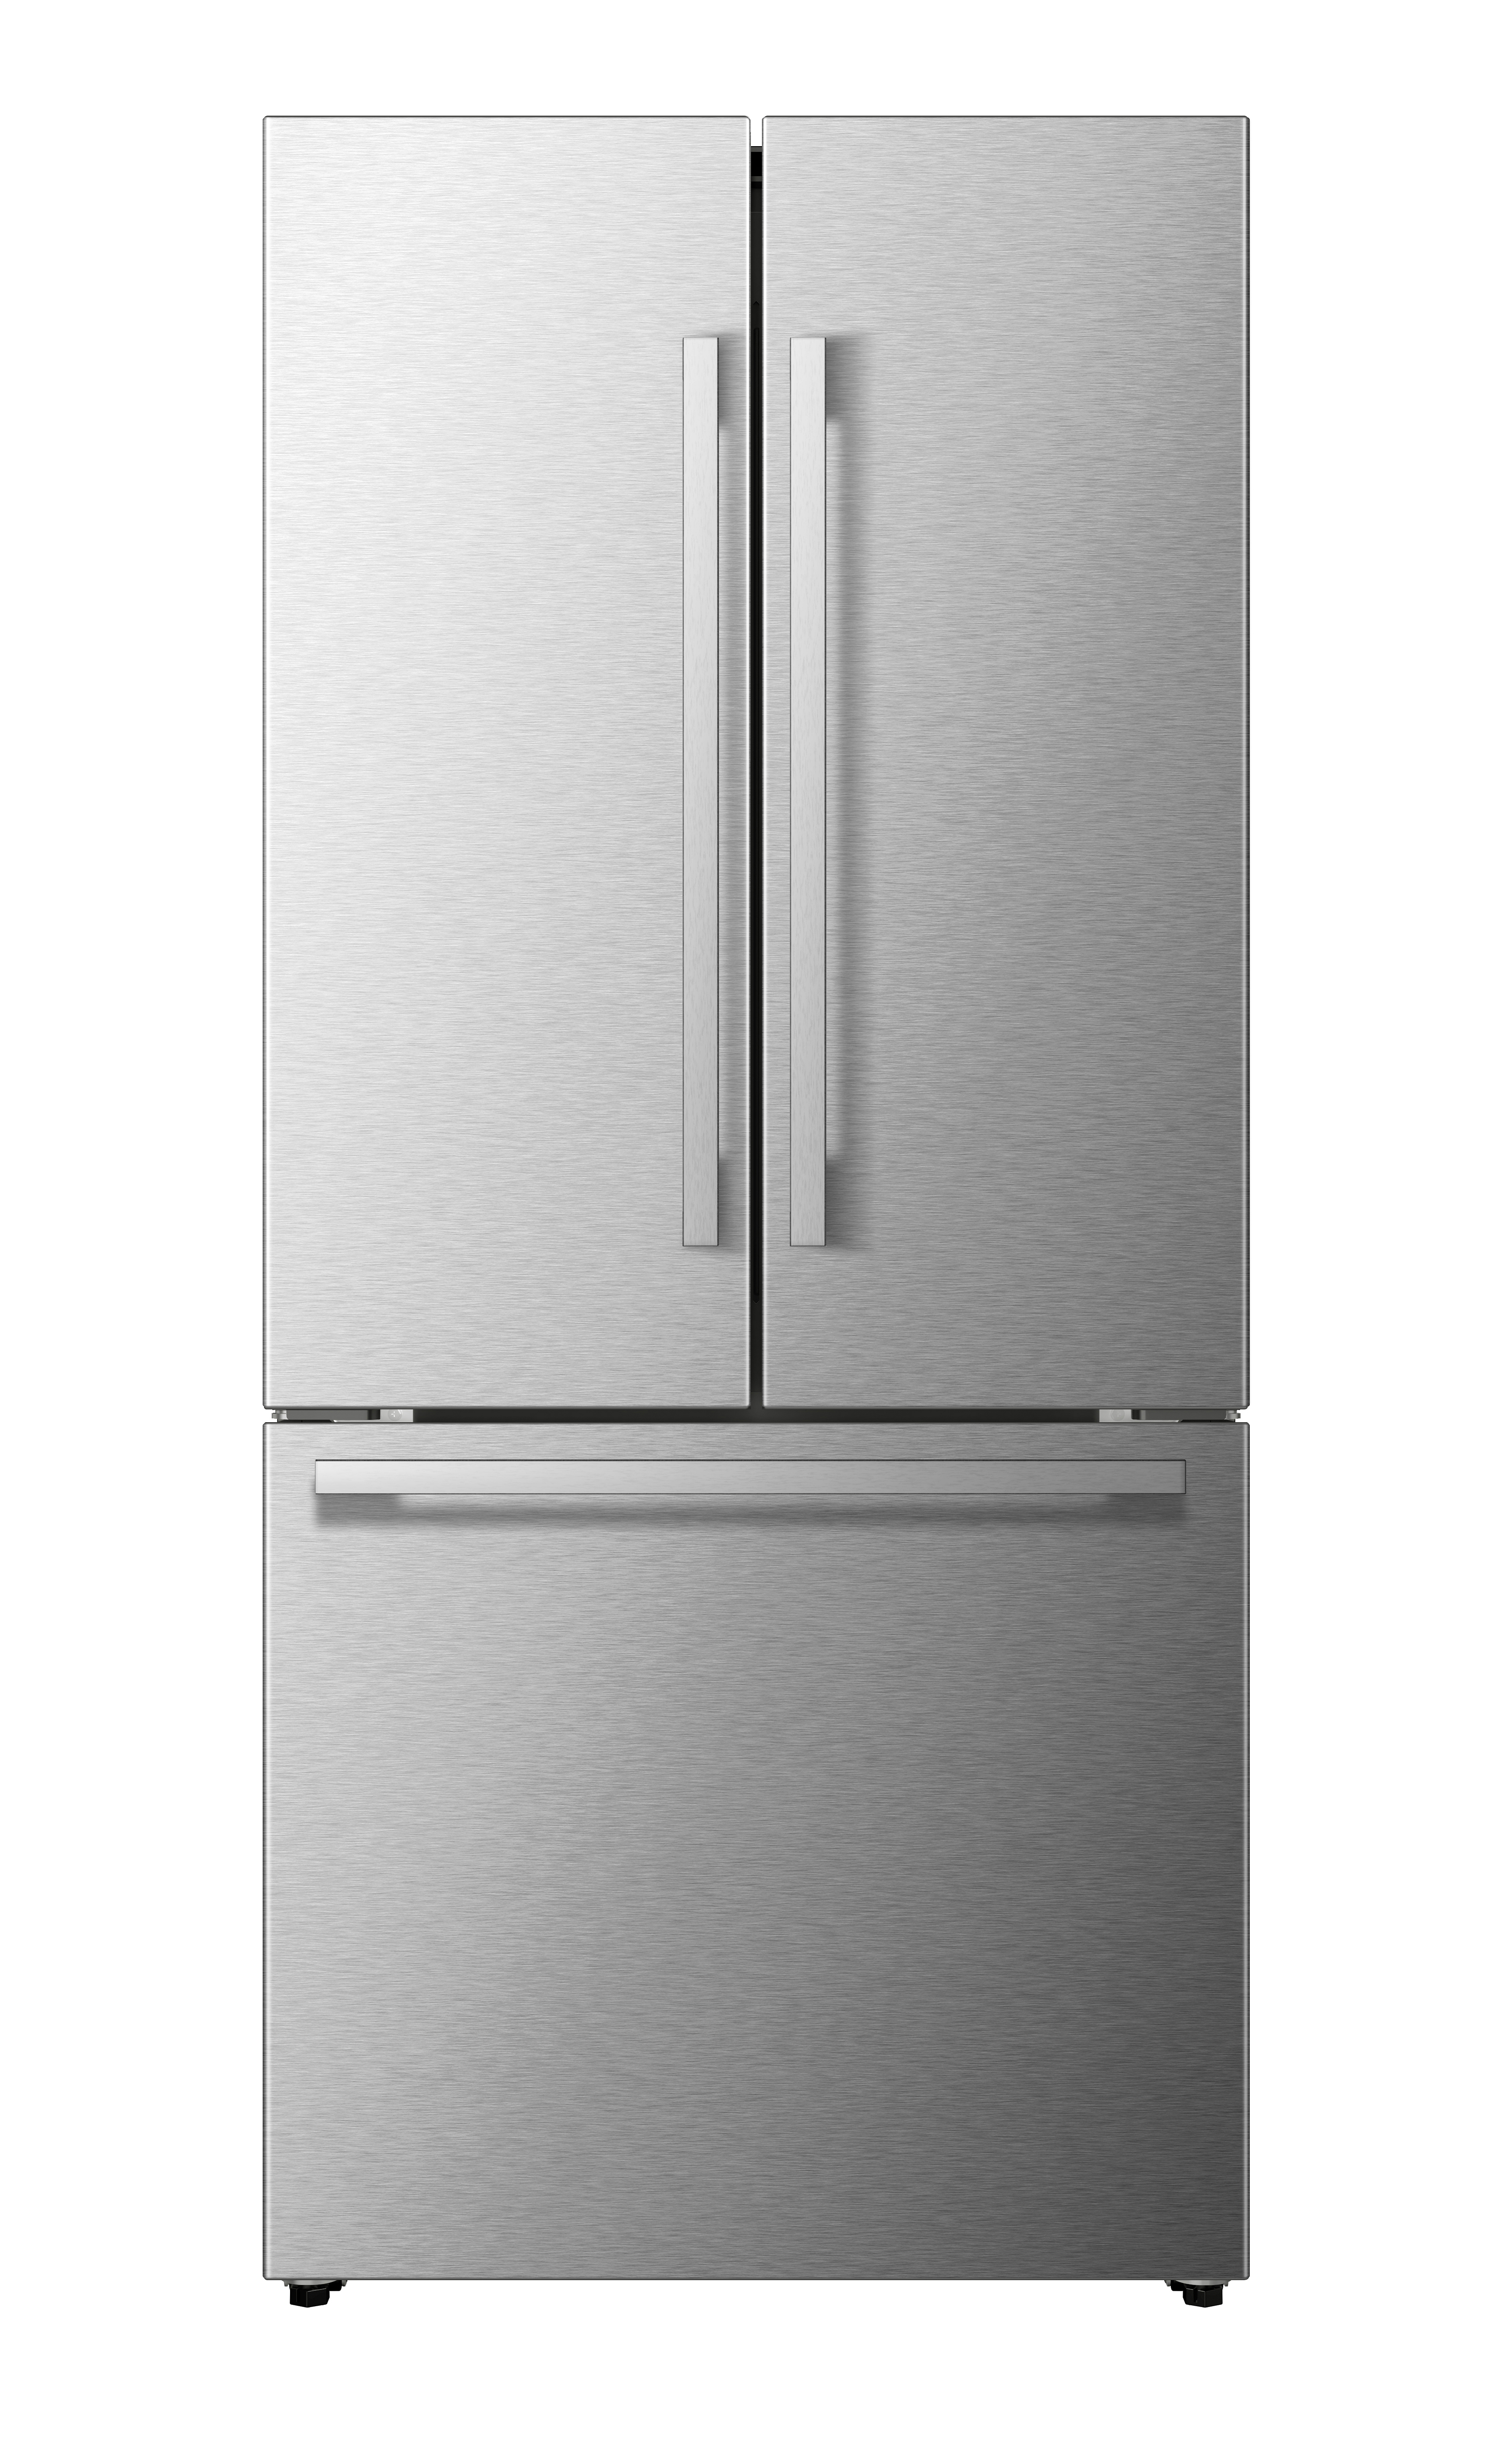 Mora 21 Cu ft French Door Refrigerator Silver Model MRF206N6BSE - image 1 of 24